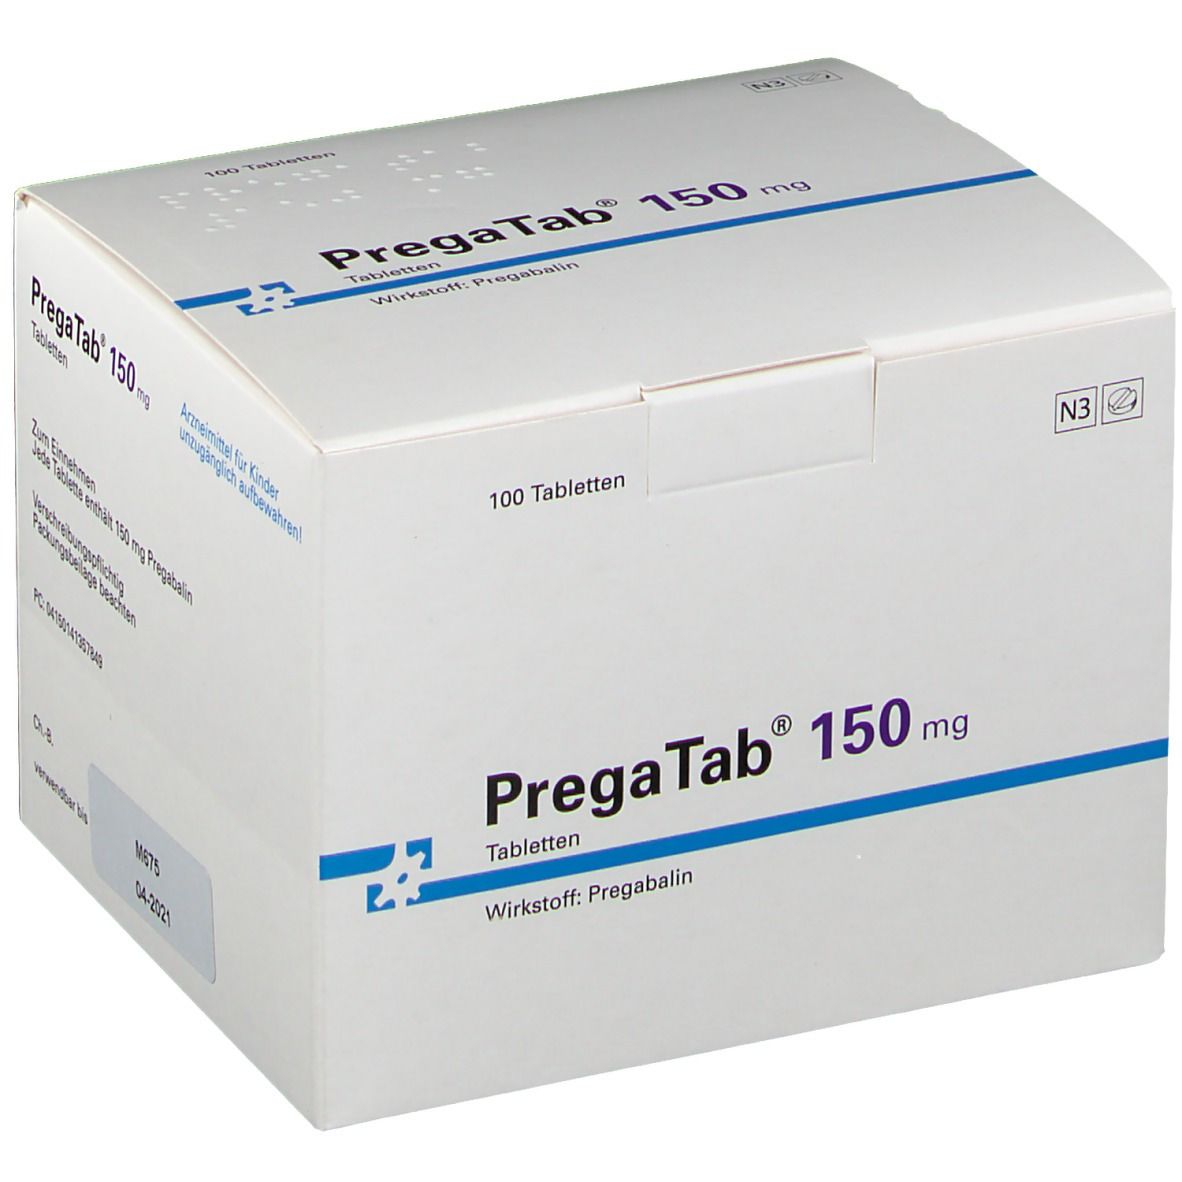 PregaTag® 150 mg